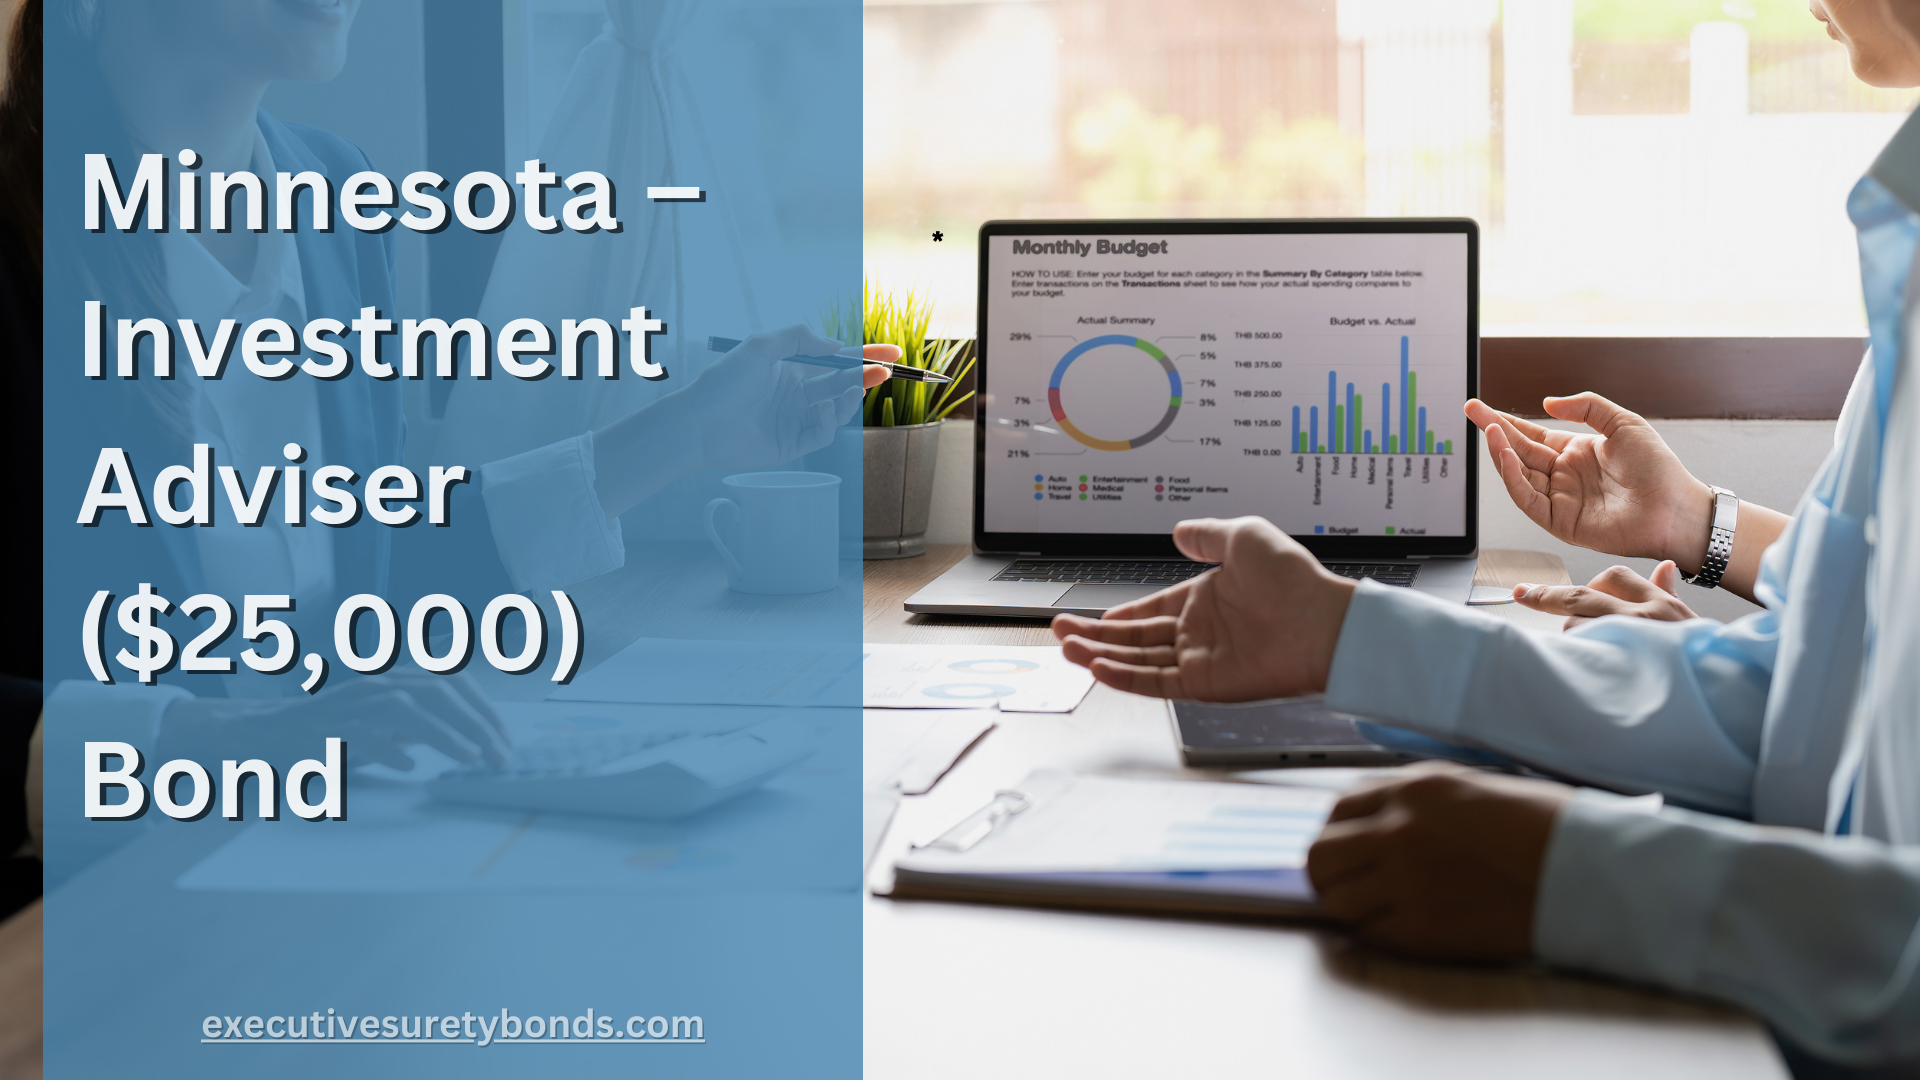 Minnesota – Investment Adviser ($25,000) Bond